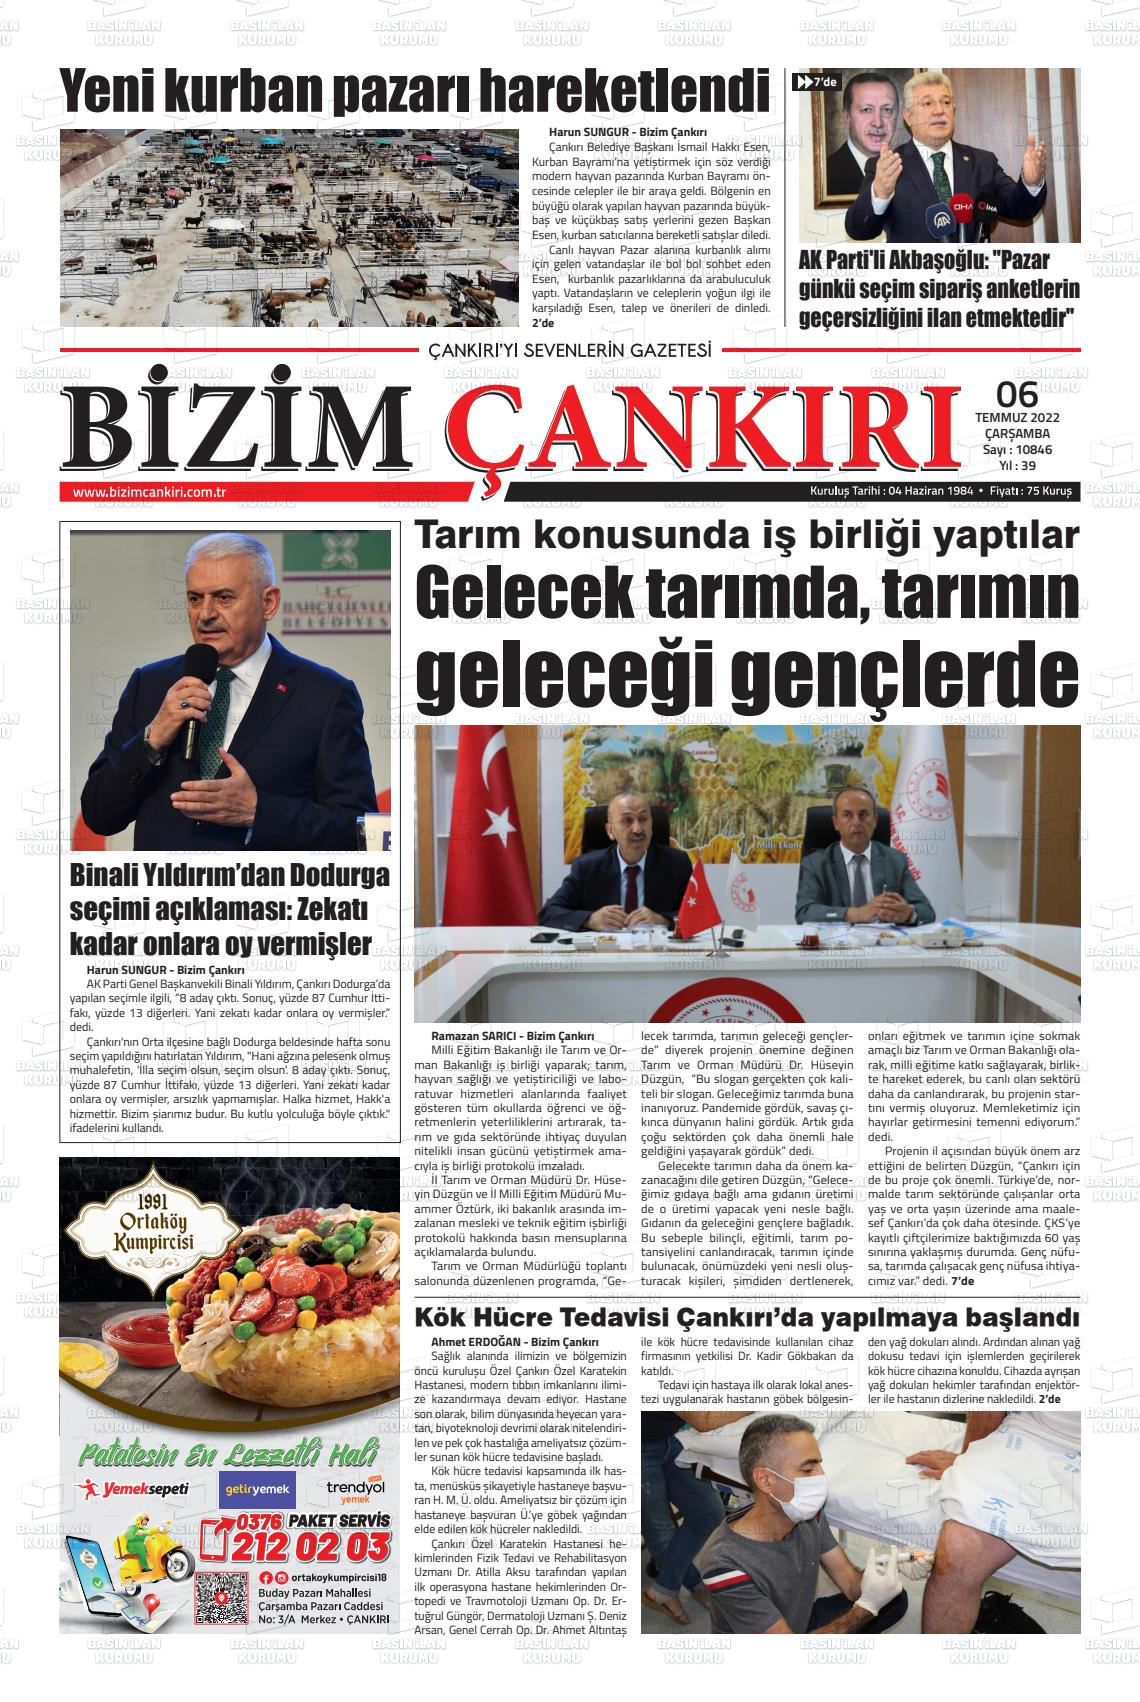 06 Temmuz 2022 Bizim Çankırı Gazete Manşeti